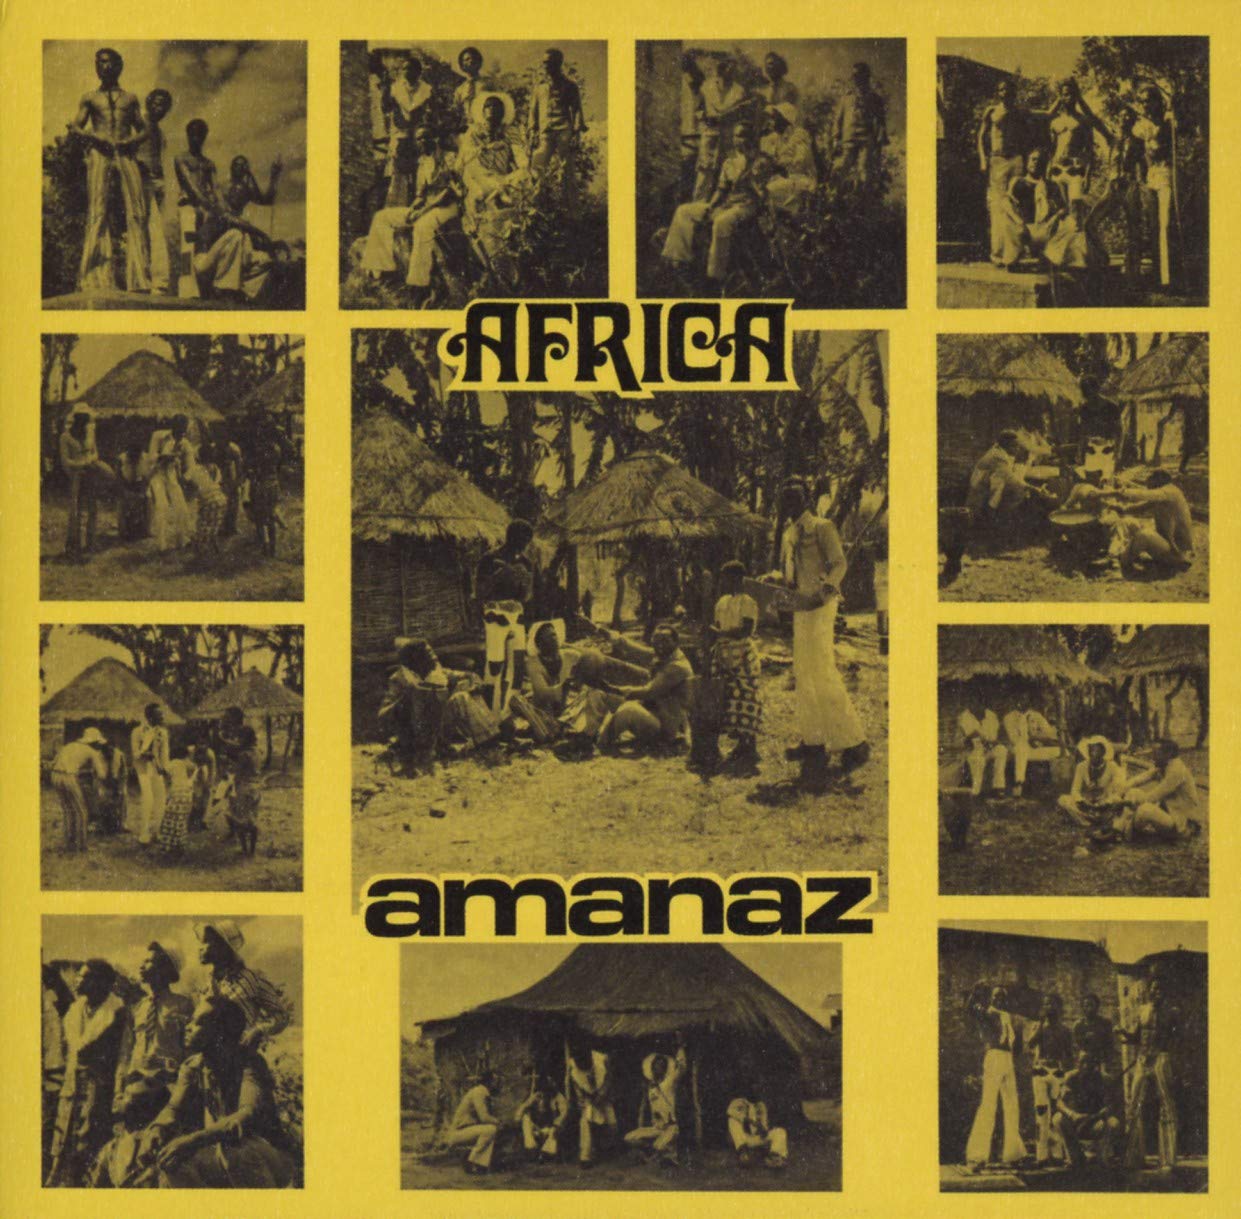 Amanaz - Africa - 2LP